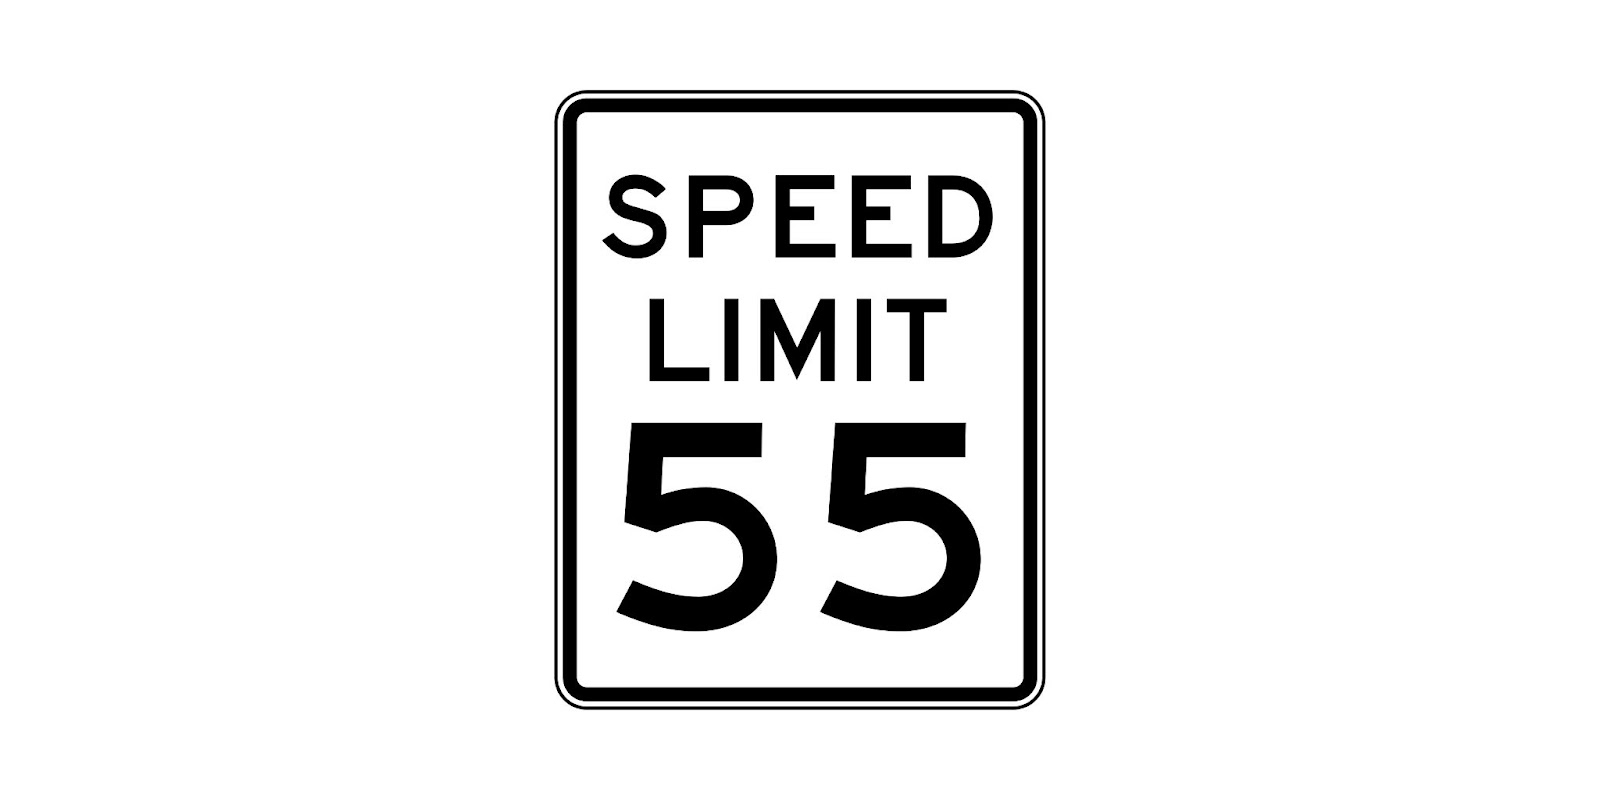 Arkansas Road Signs speed limit